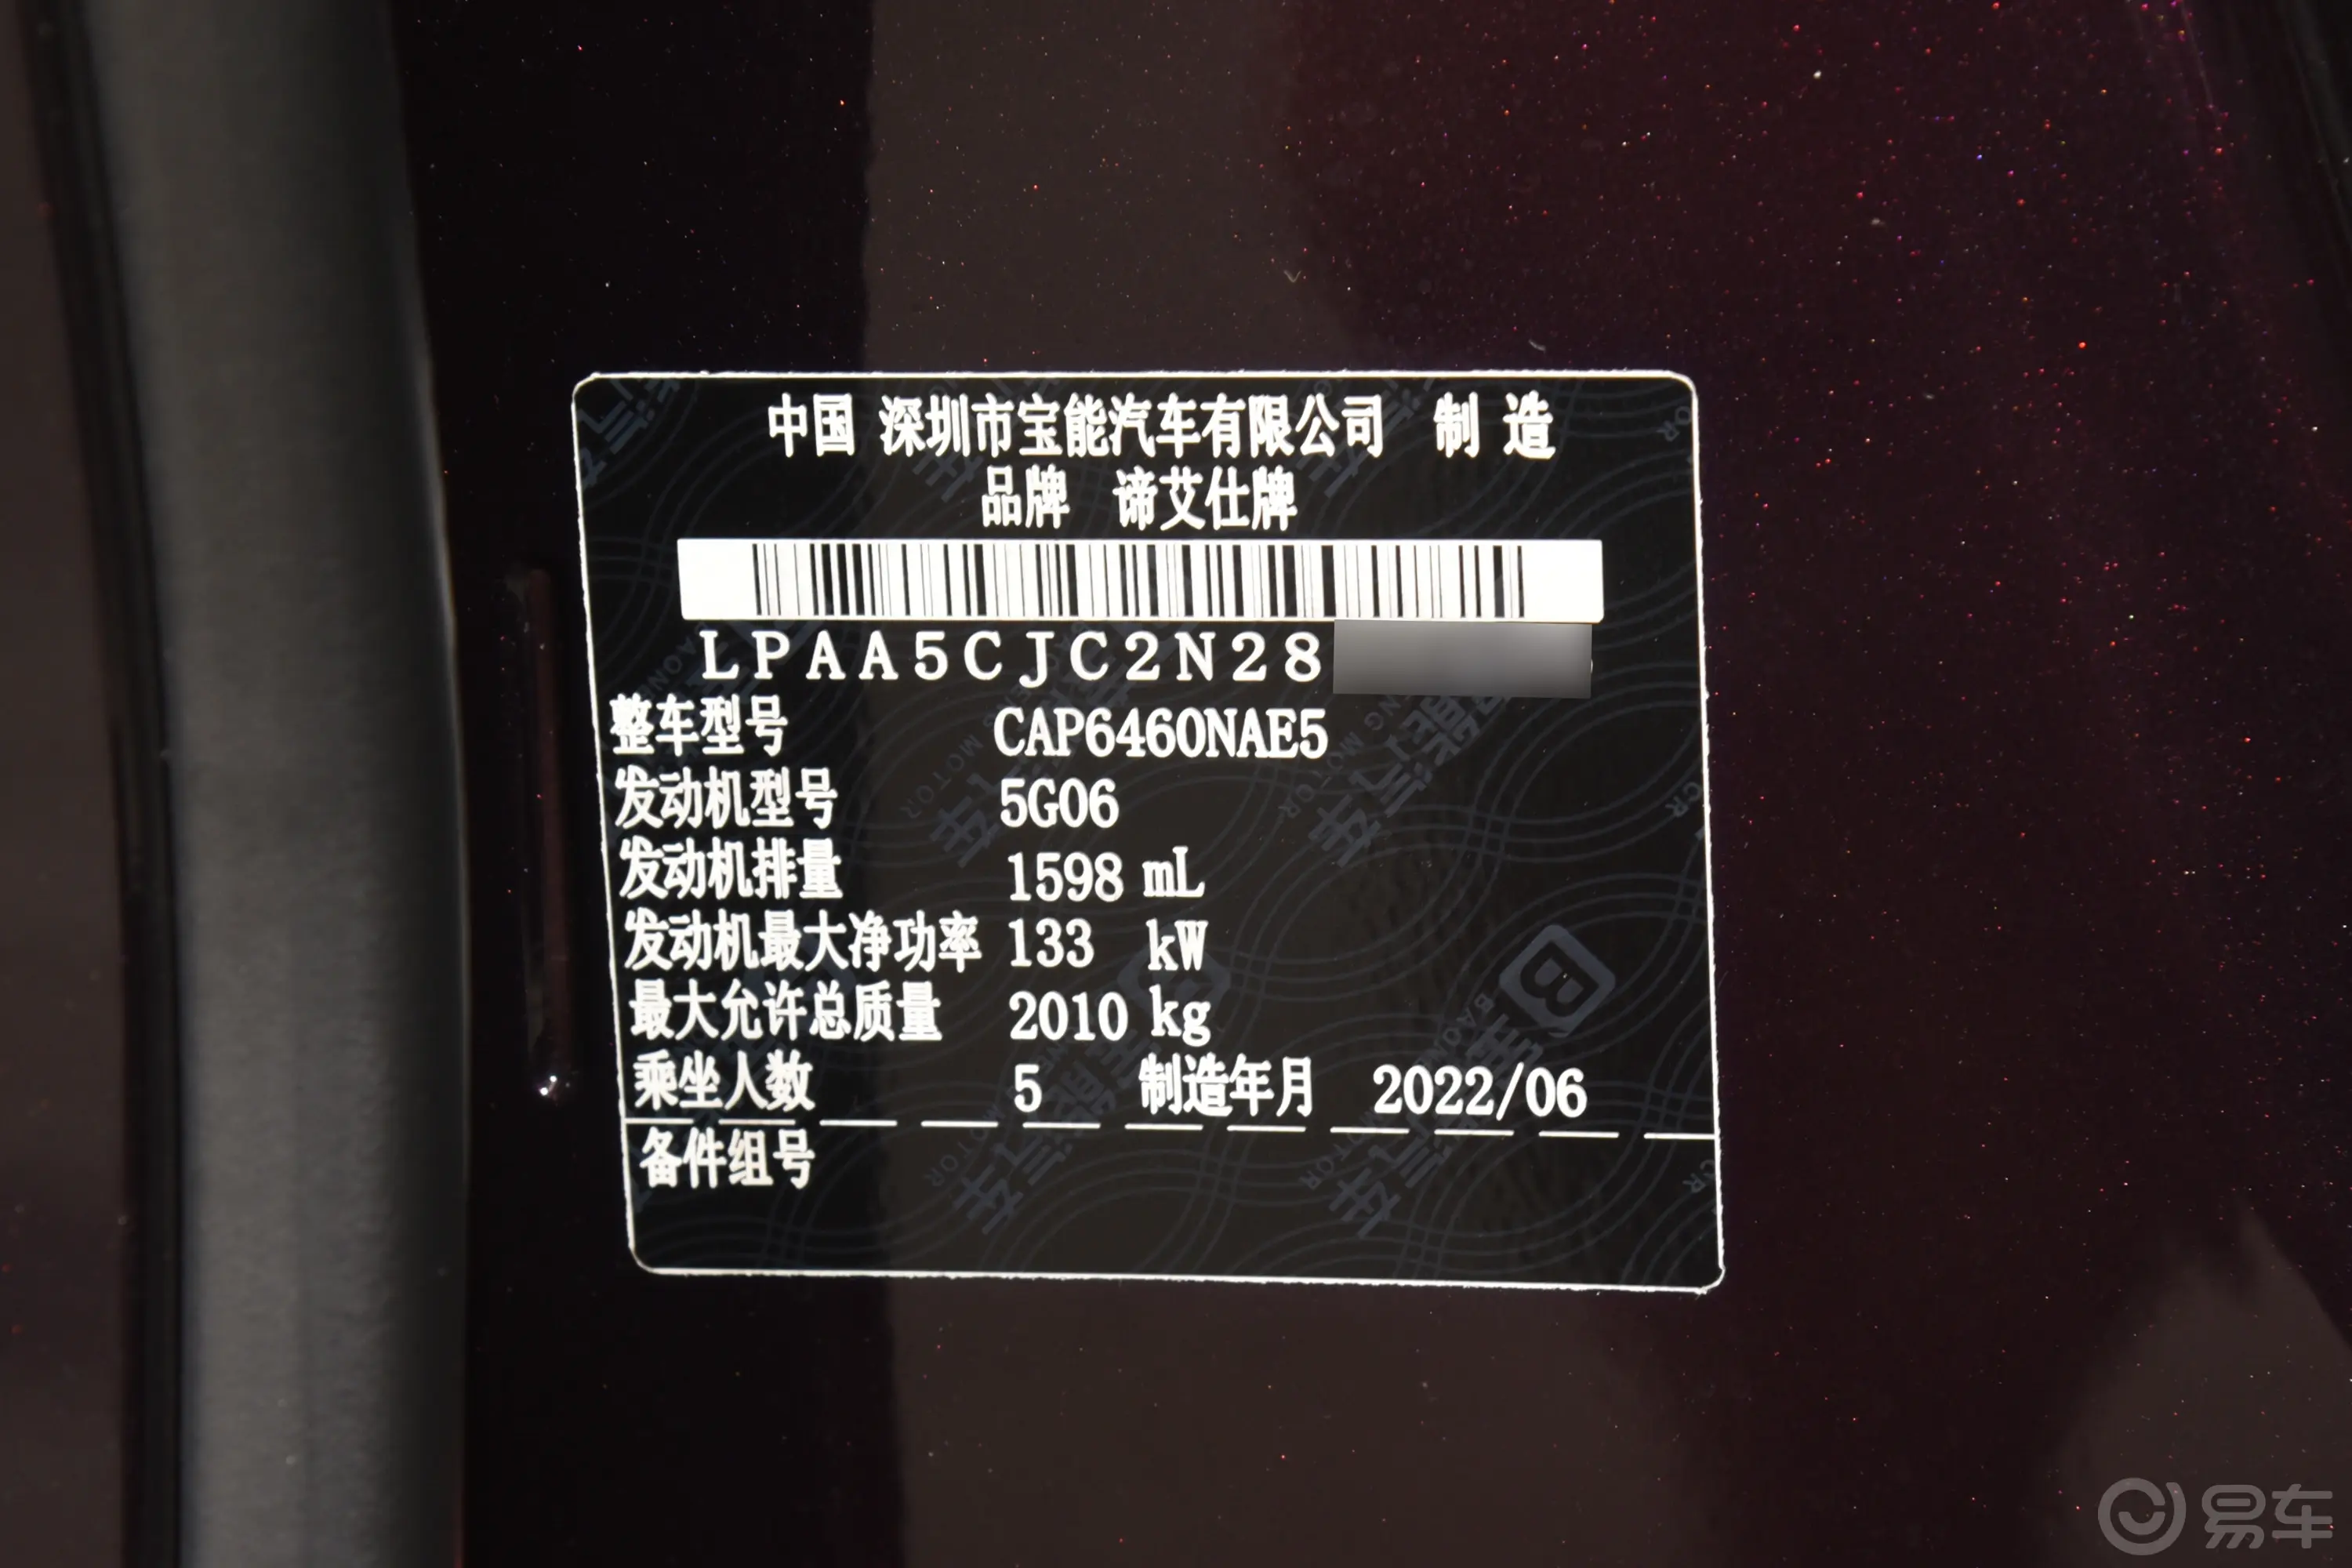 DS 735THP 蒙马特十周年臻藏版车辆信息铭牌